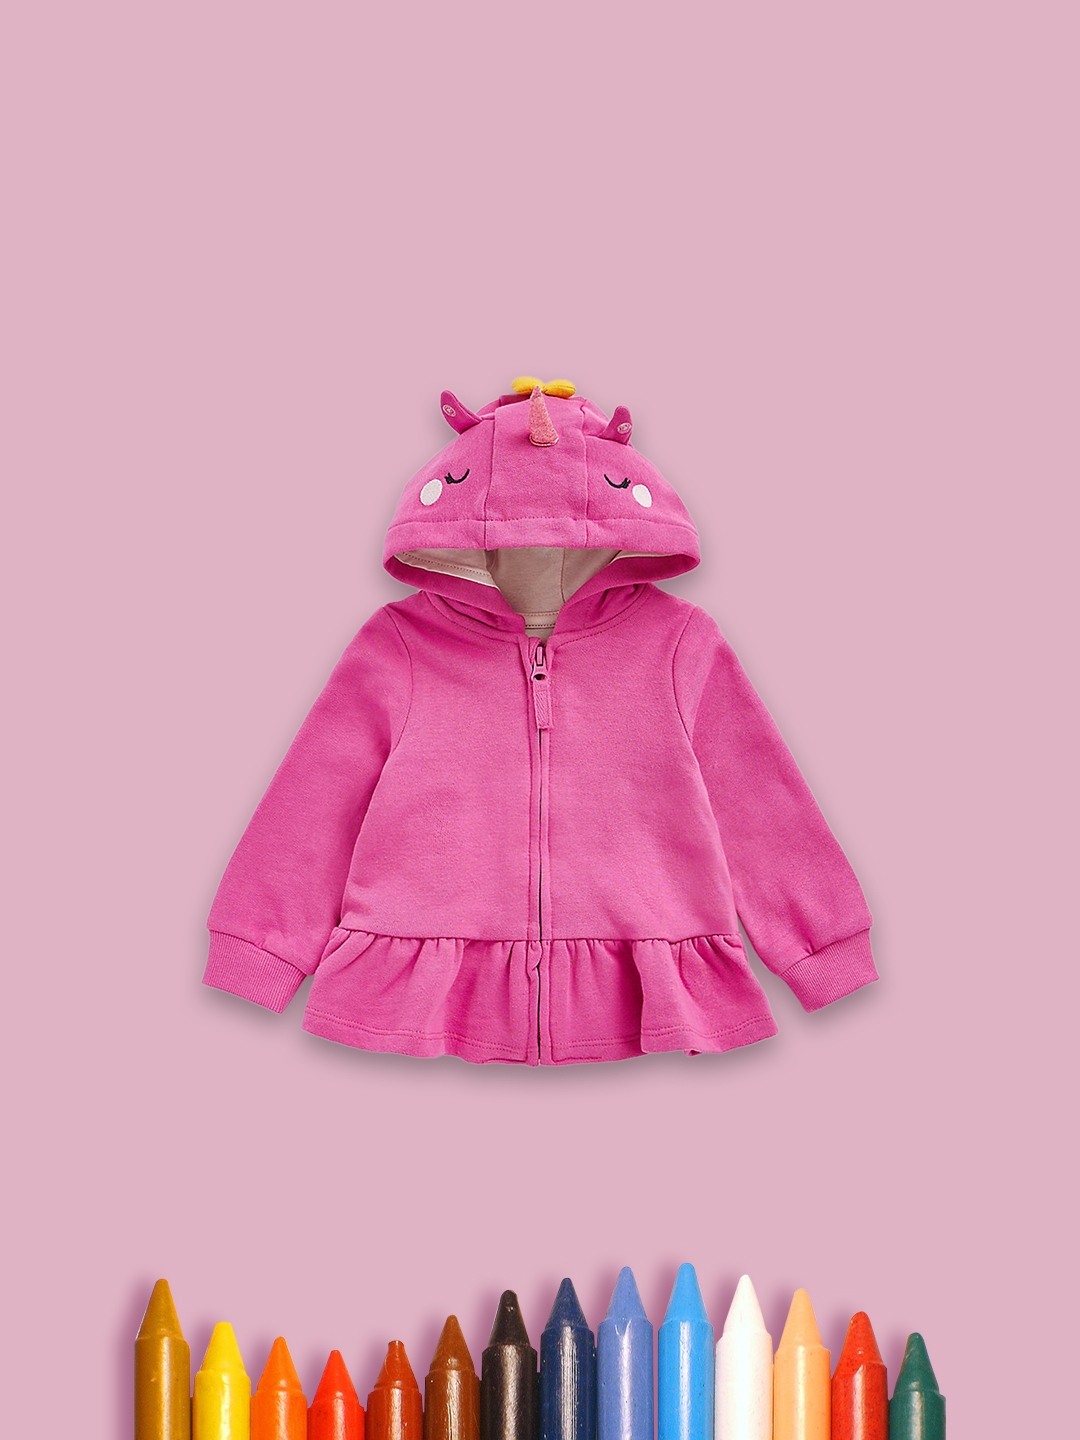 Girls Full Sleeves Sweatshirt 3D Unicorn Design-Pack of 1-Pink